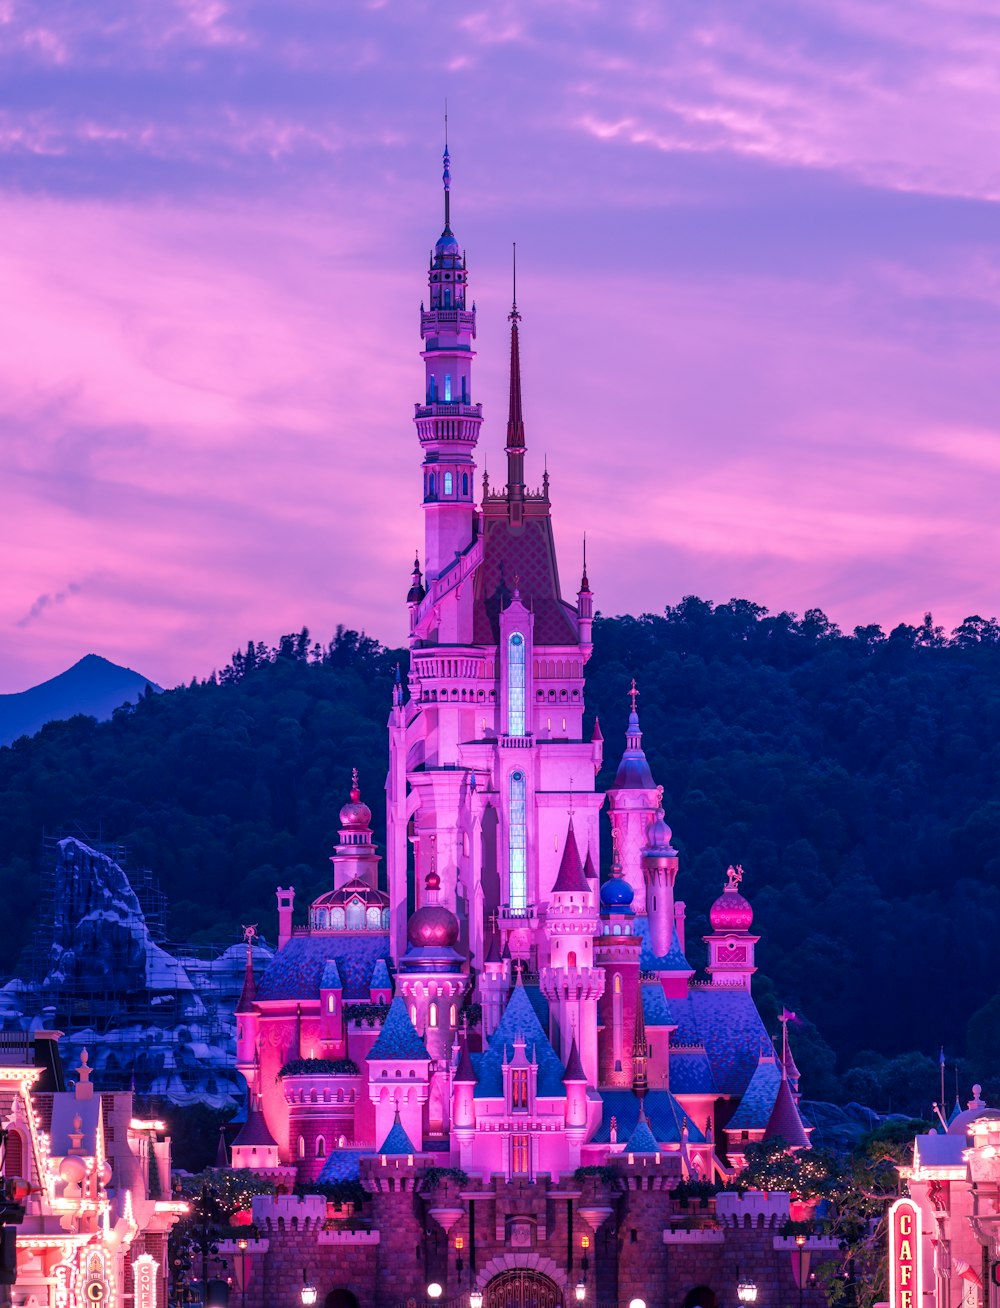 Un castello con un cielo rosa e viola